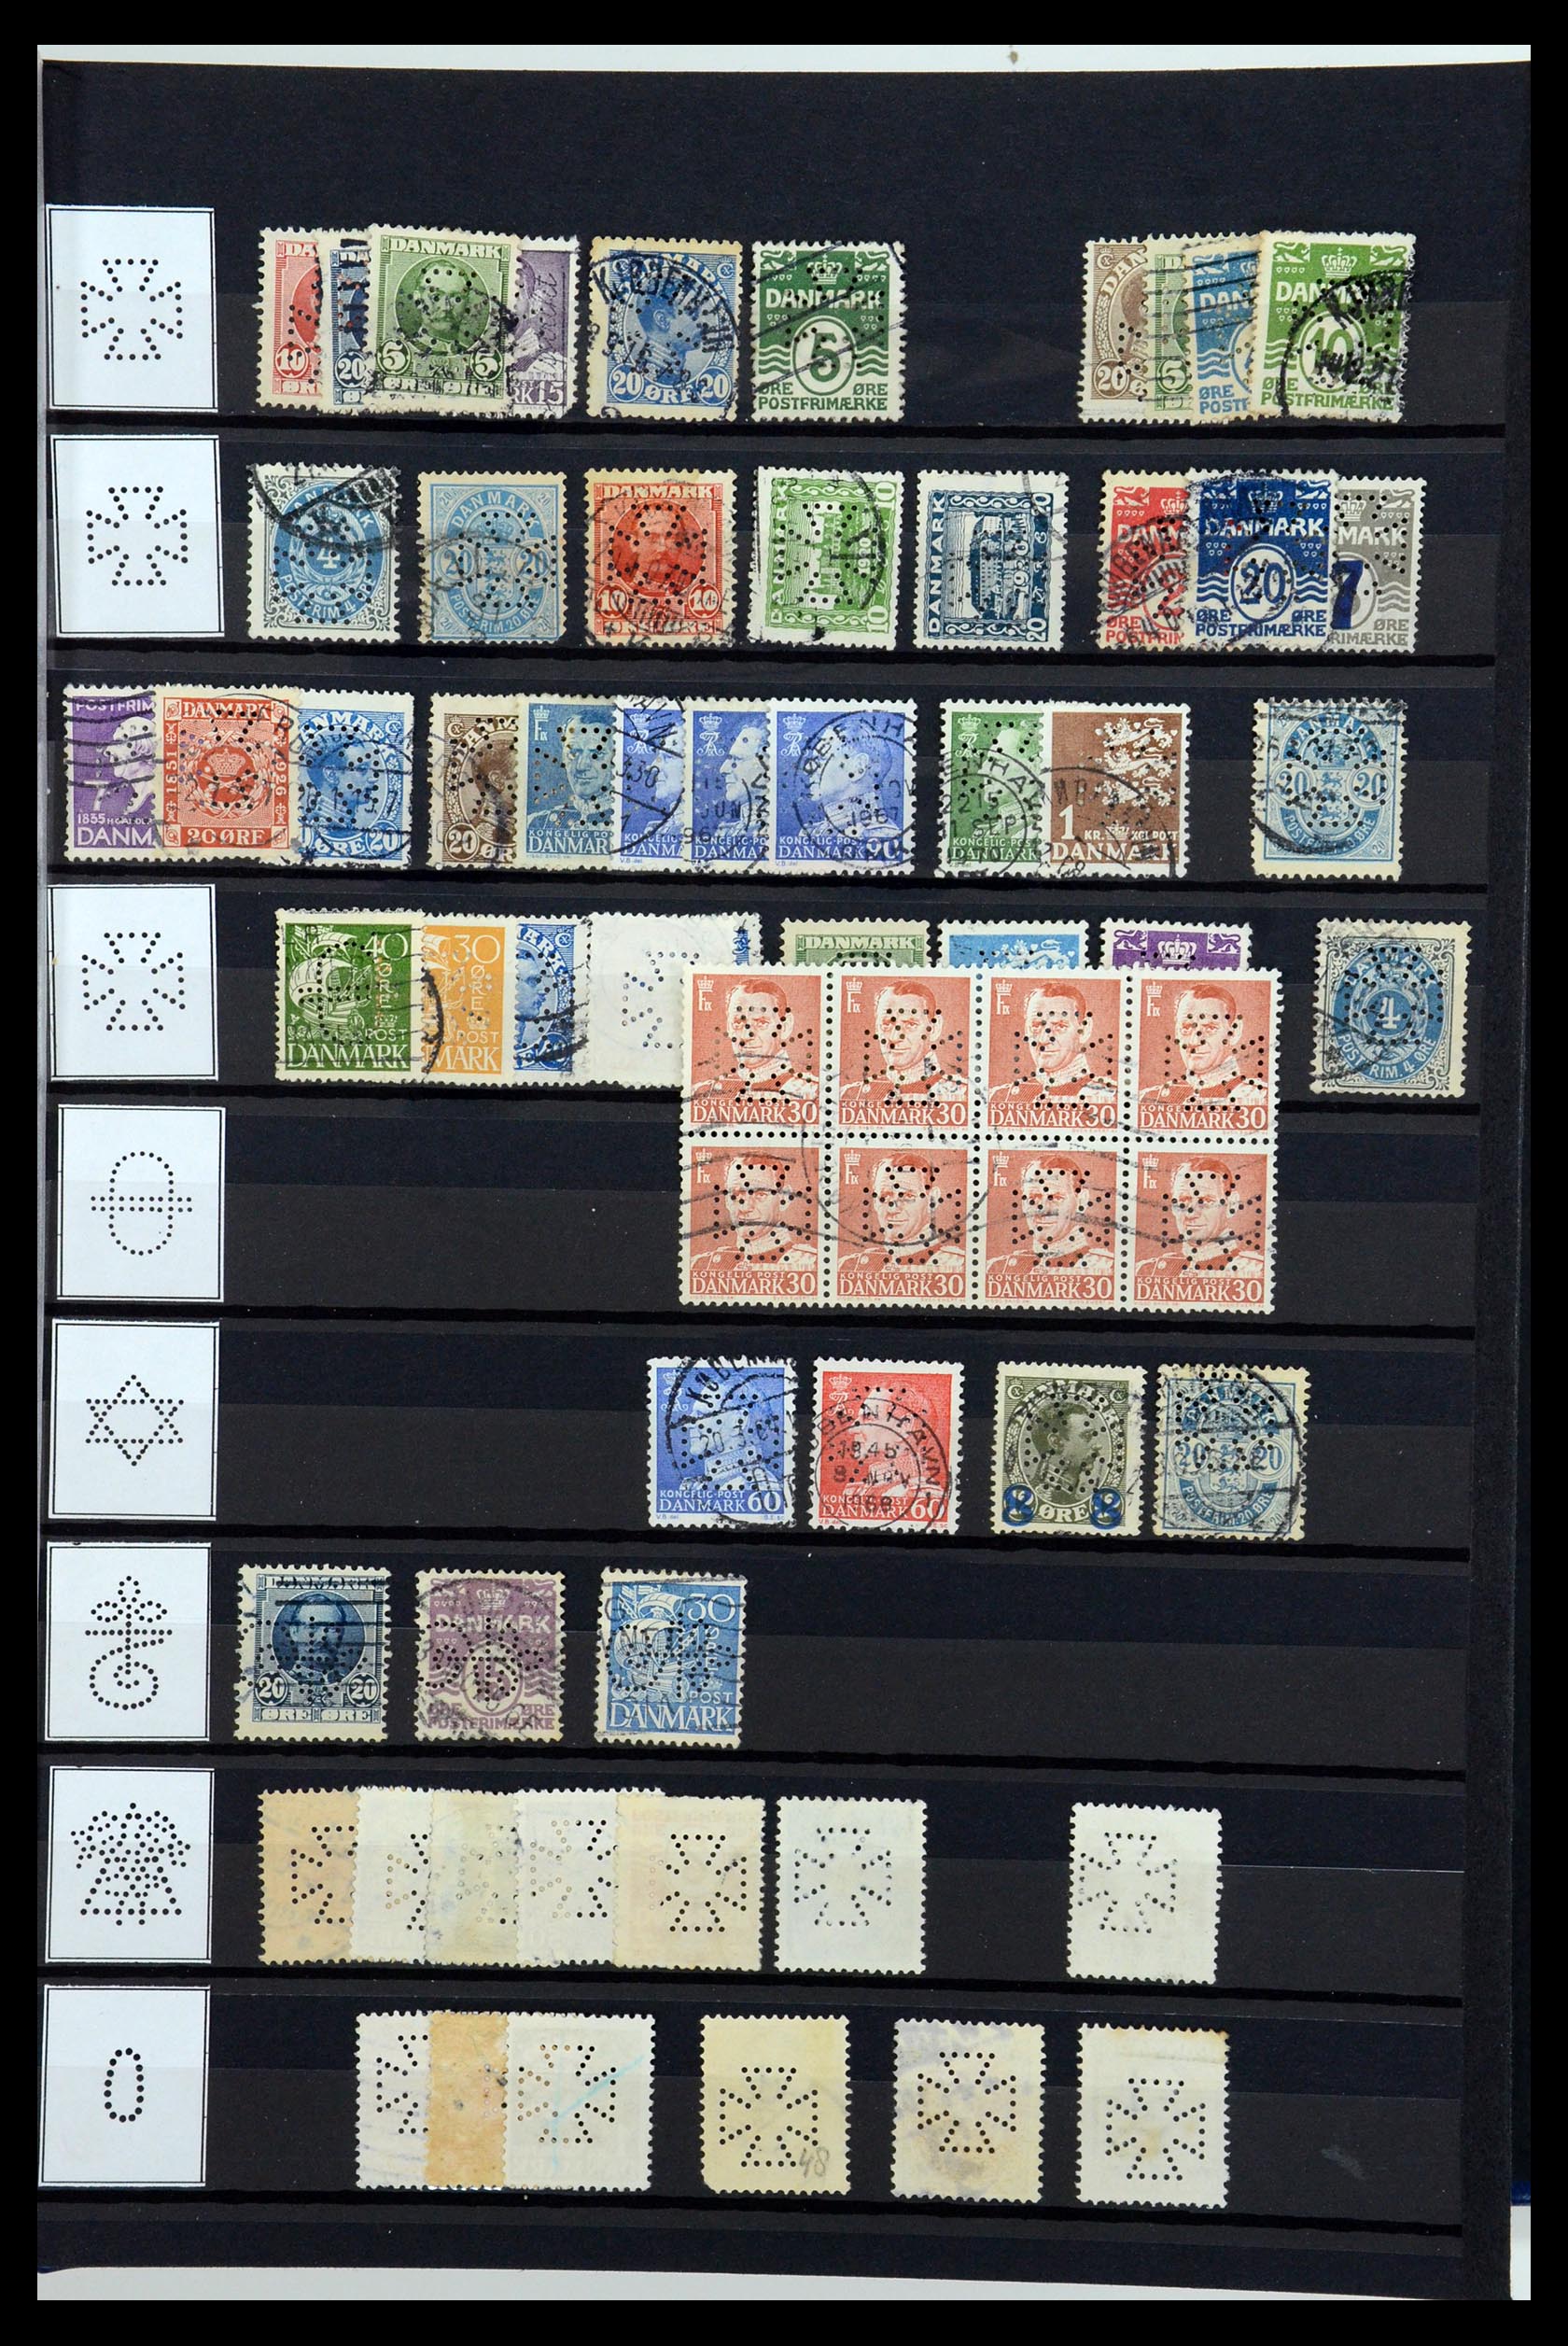 36396 235 - Stamp collection 36396 Denmark perfins.